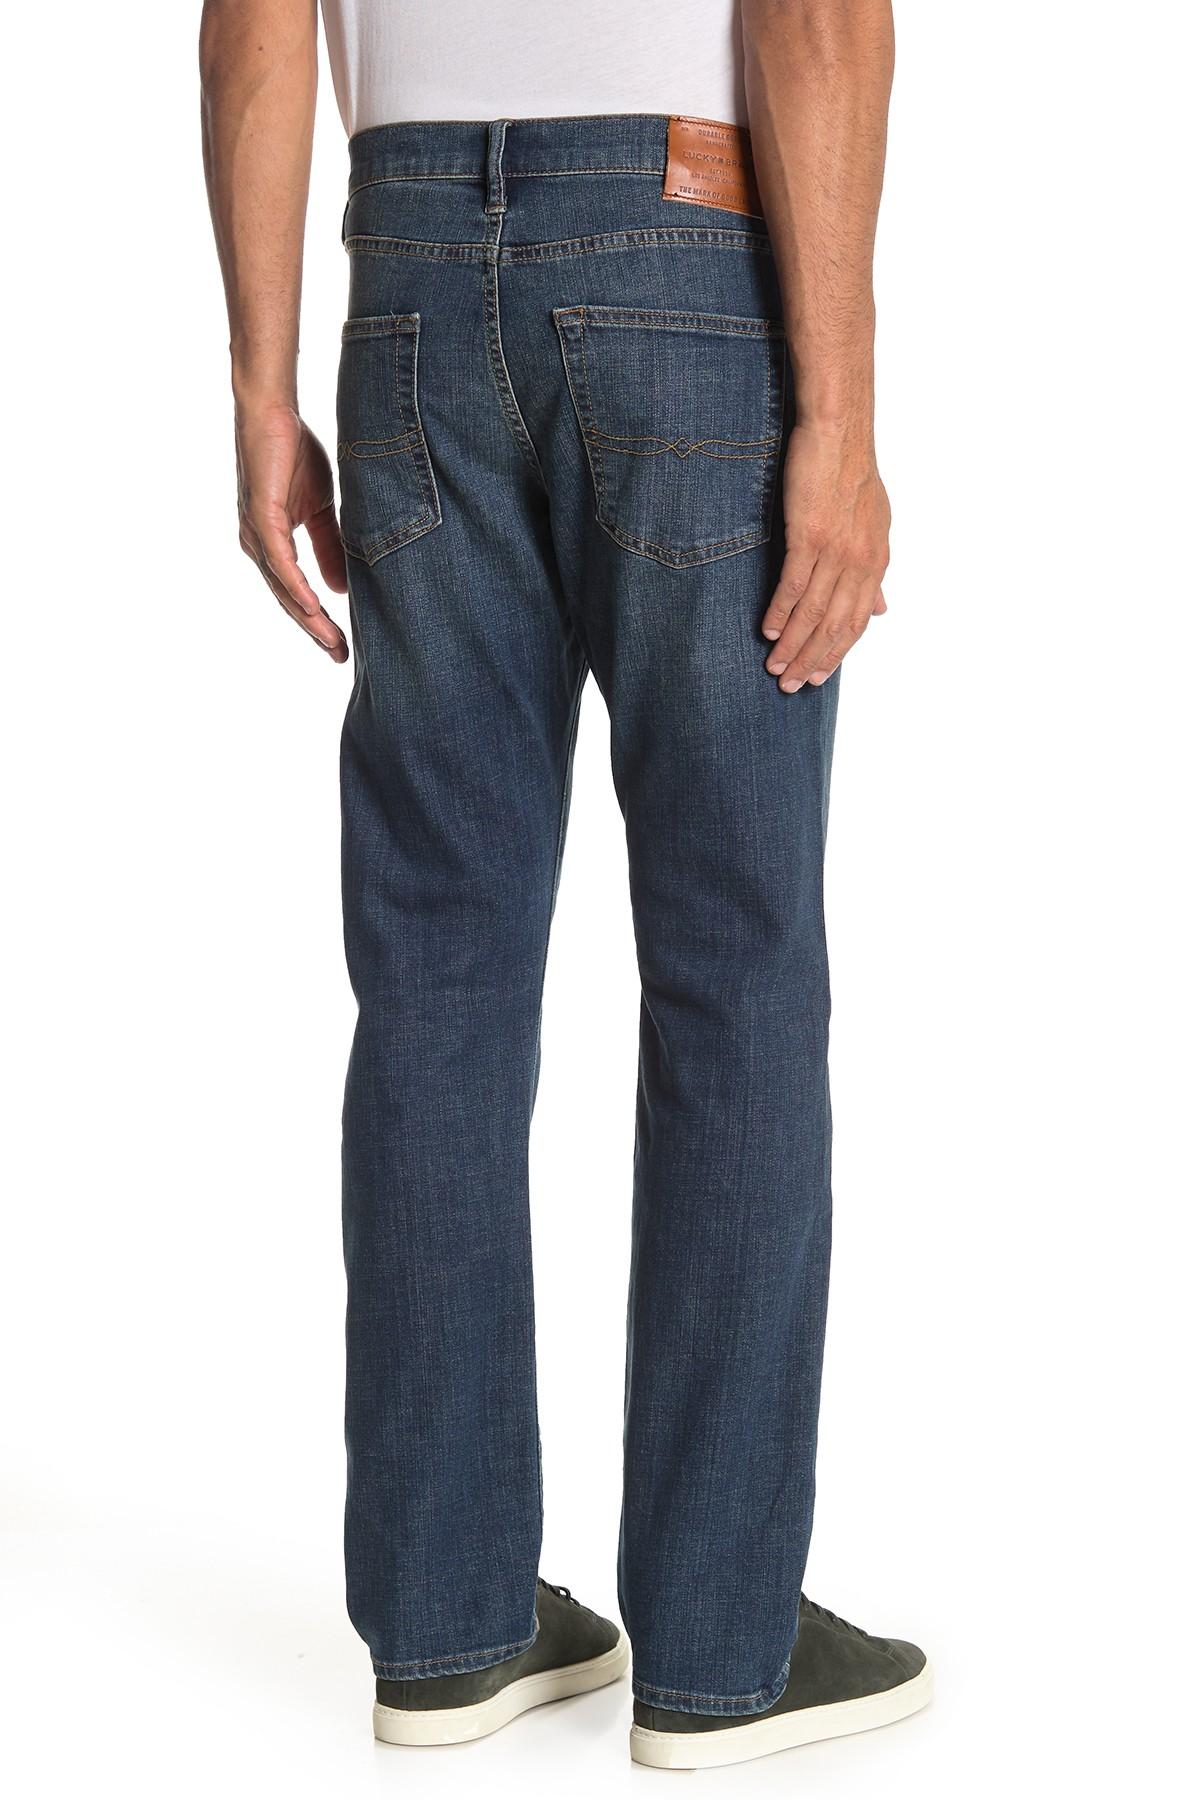 Lucky Brand Denim 410 Athletic Slim Fit Jeans - 30-34